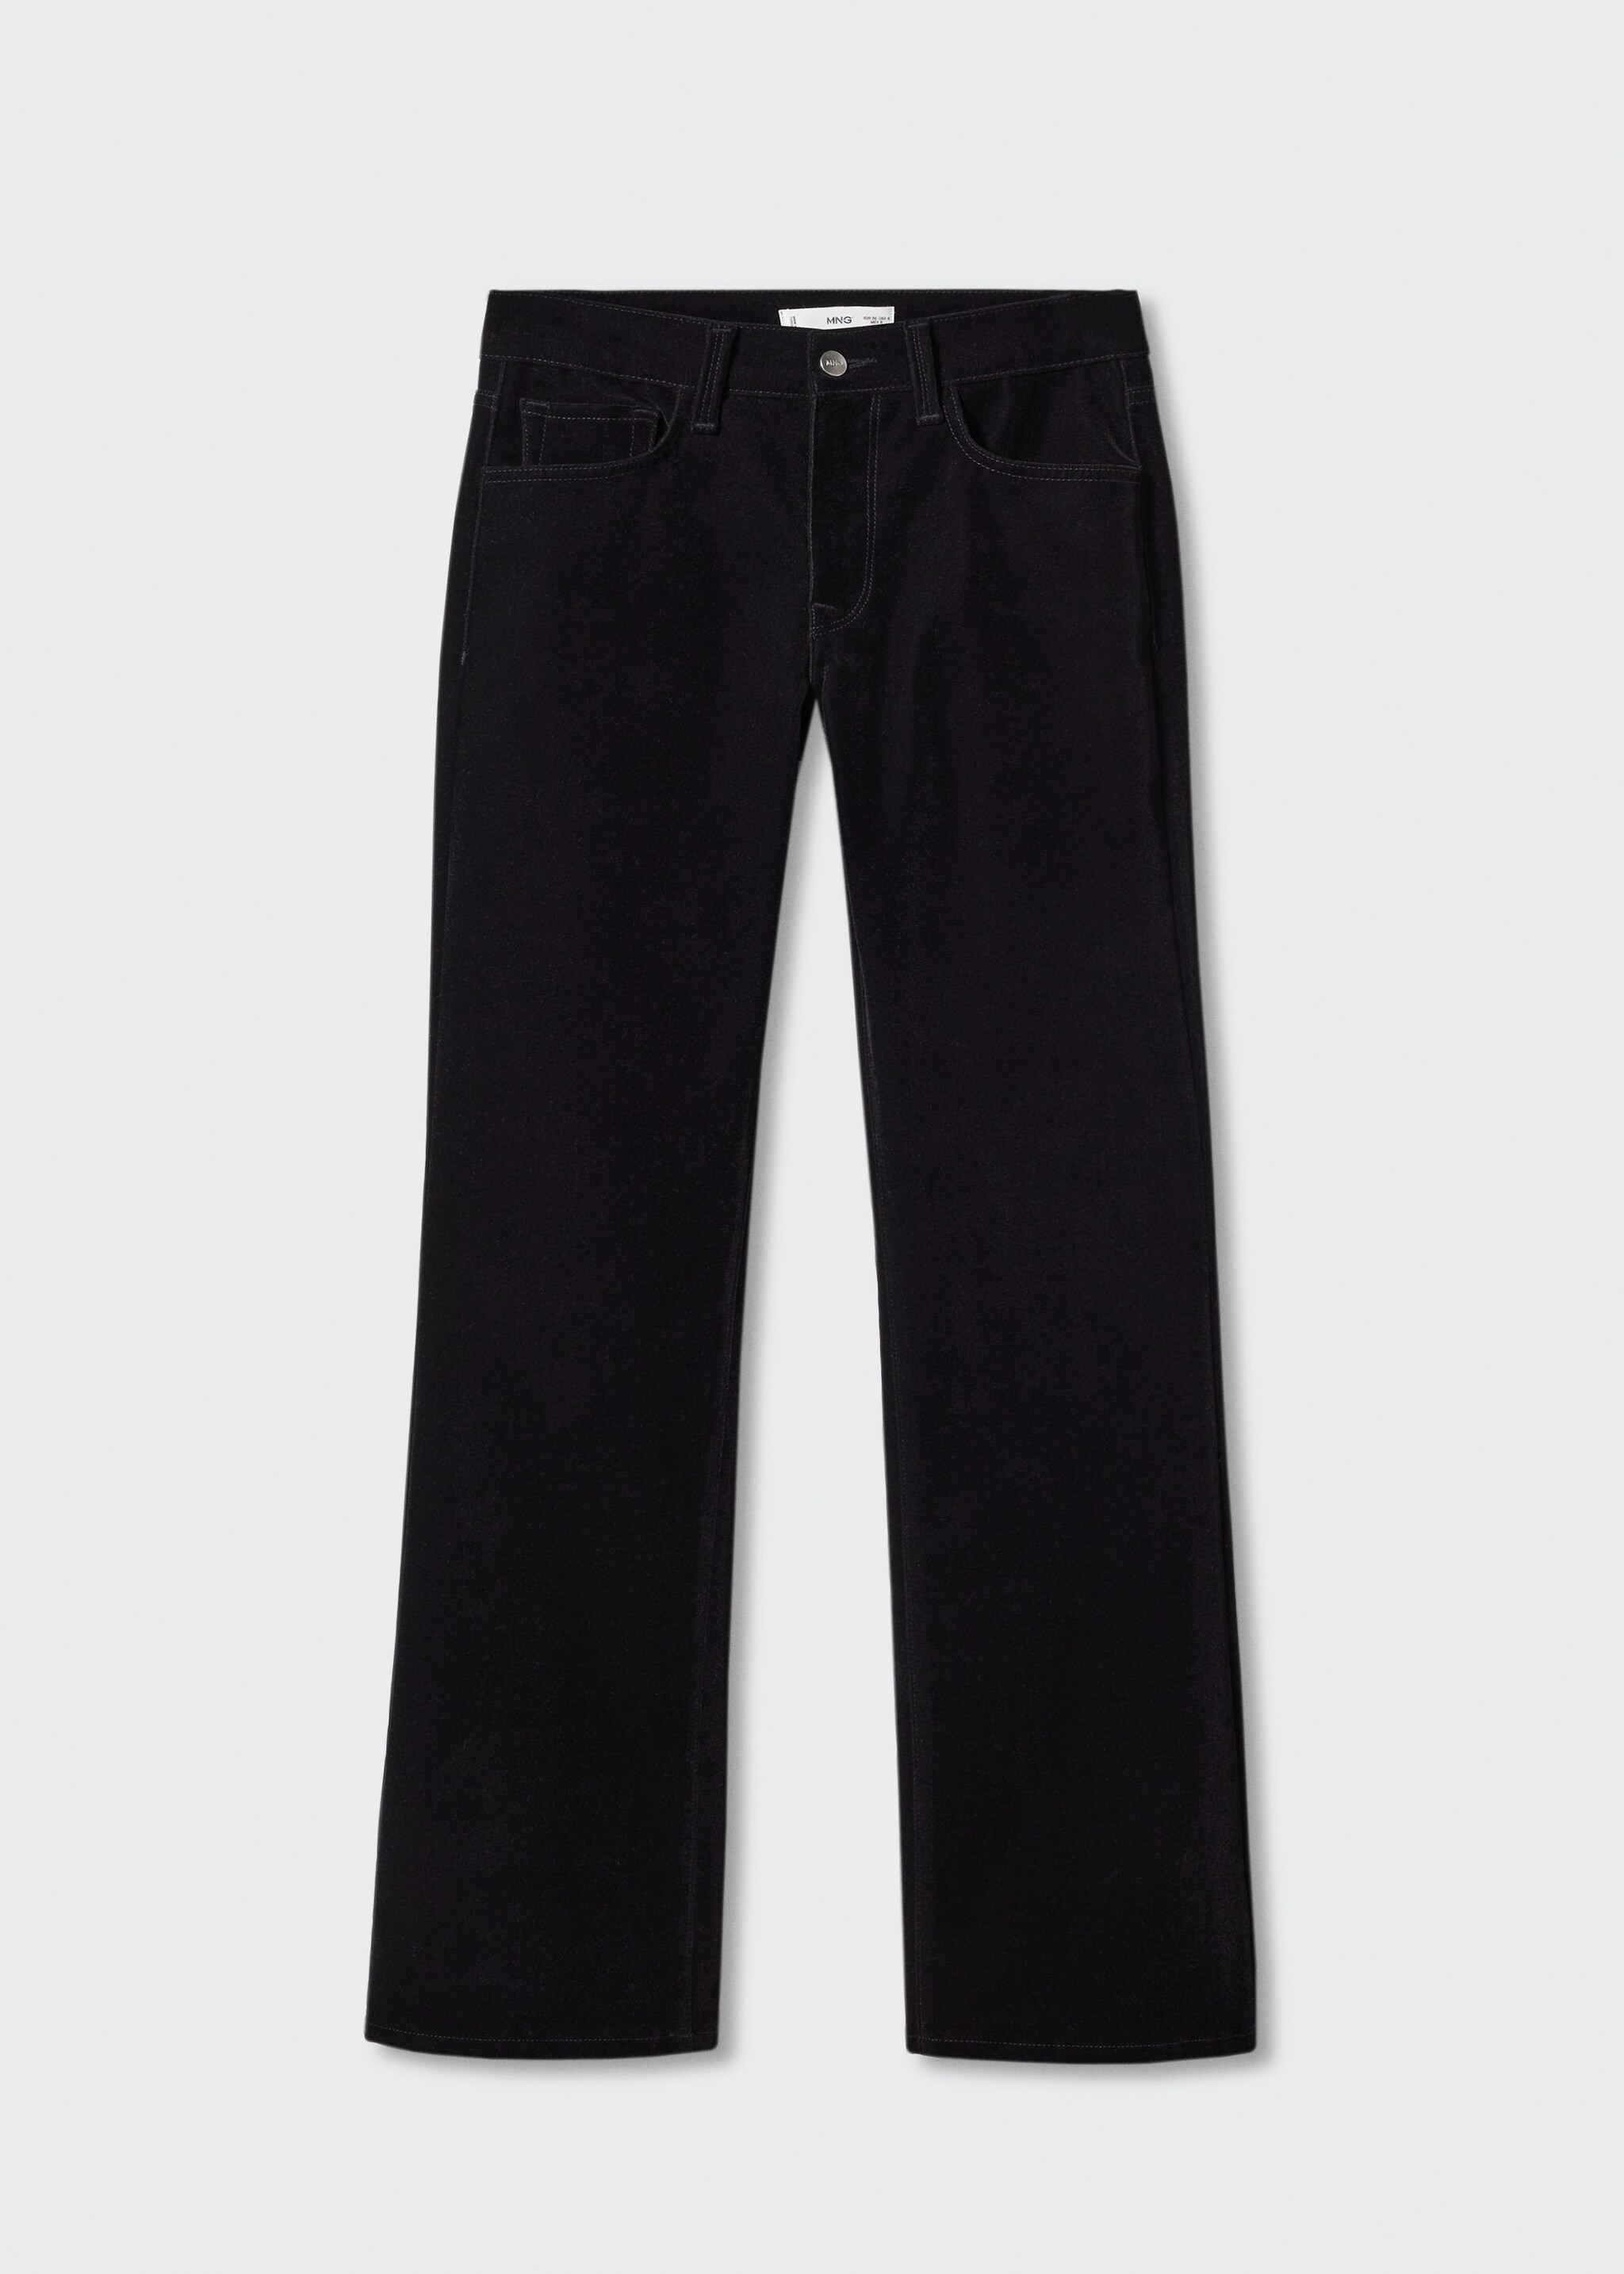 Jeans flare tiro medio terciopelo - Artículo sin modelo